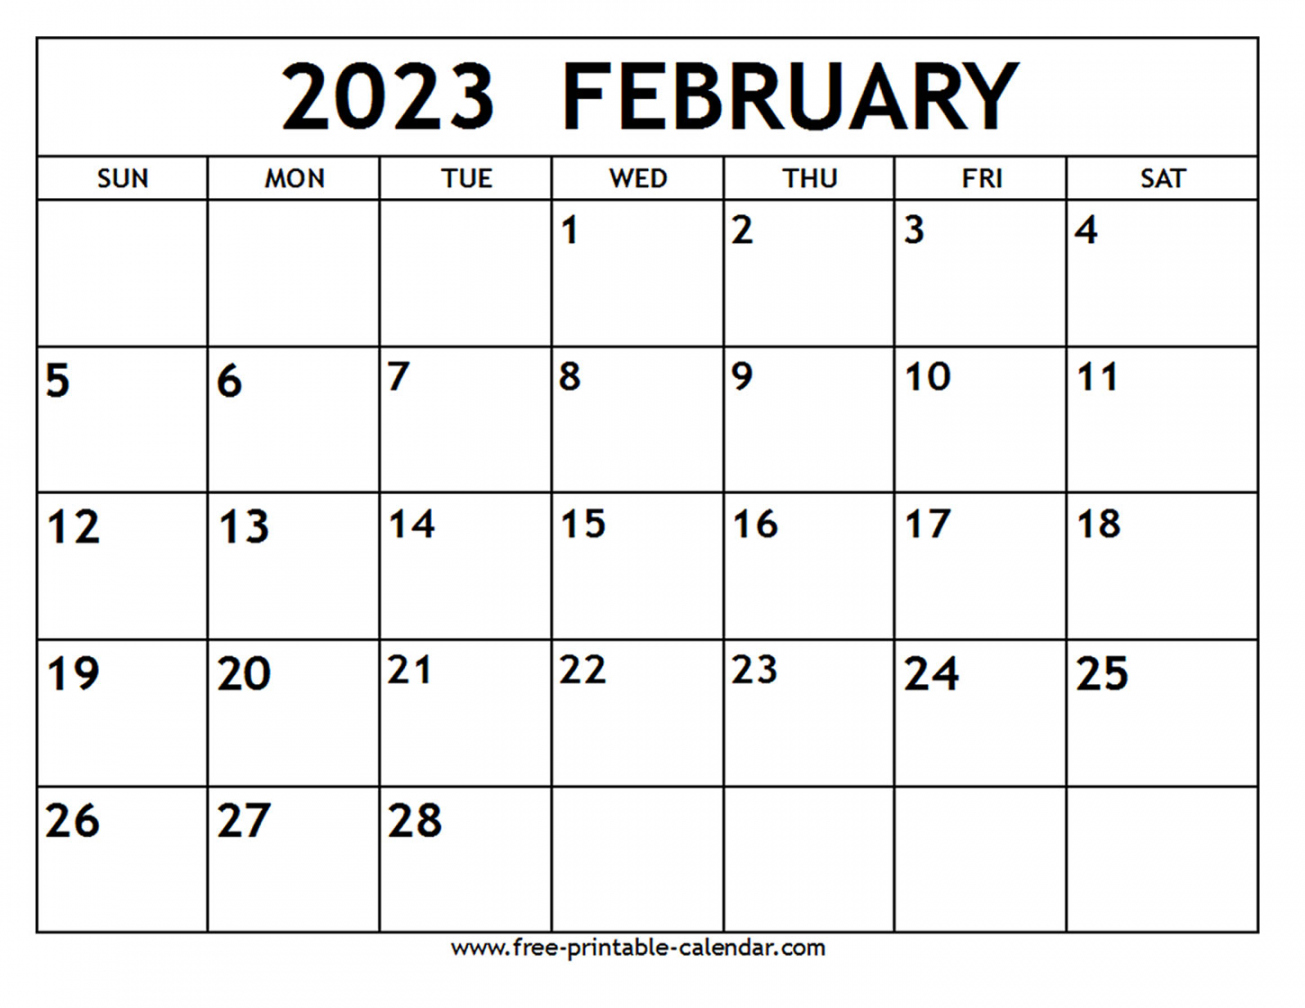 February Free Printable Calendar - Printable - February  Calendar - Free-printable-calendar